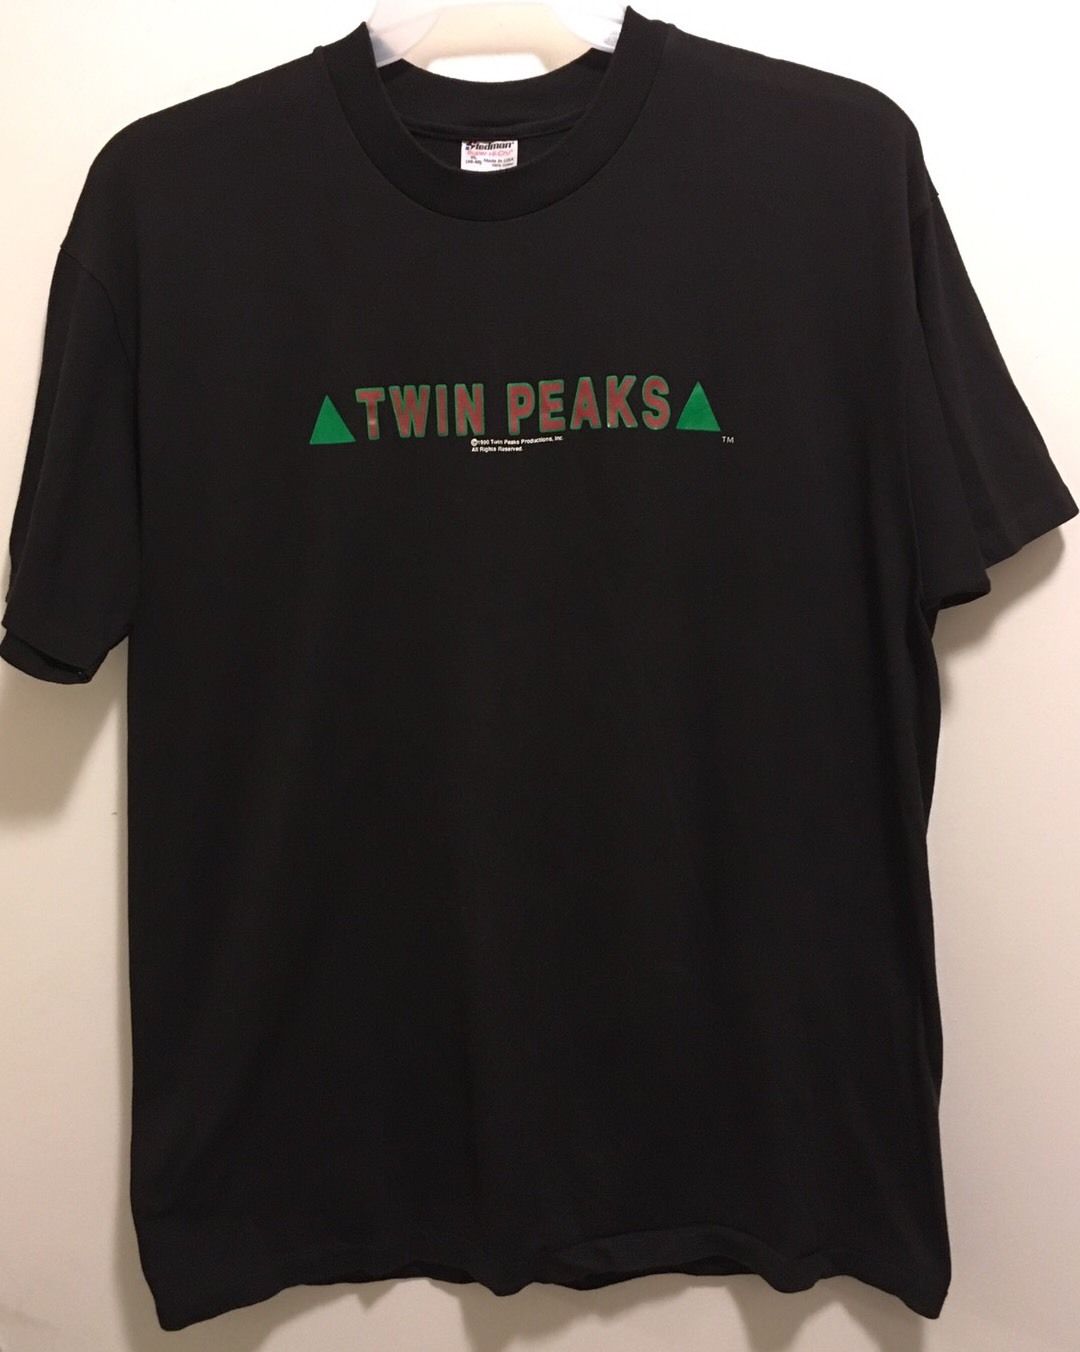 New Authentic Rare Vintage Twin Peaks 1990 TV Show Logo Black T-Shirt XL (46-48)